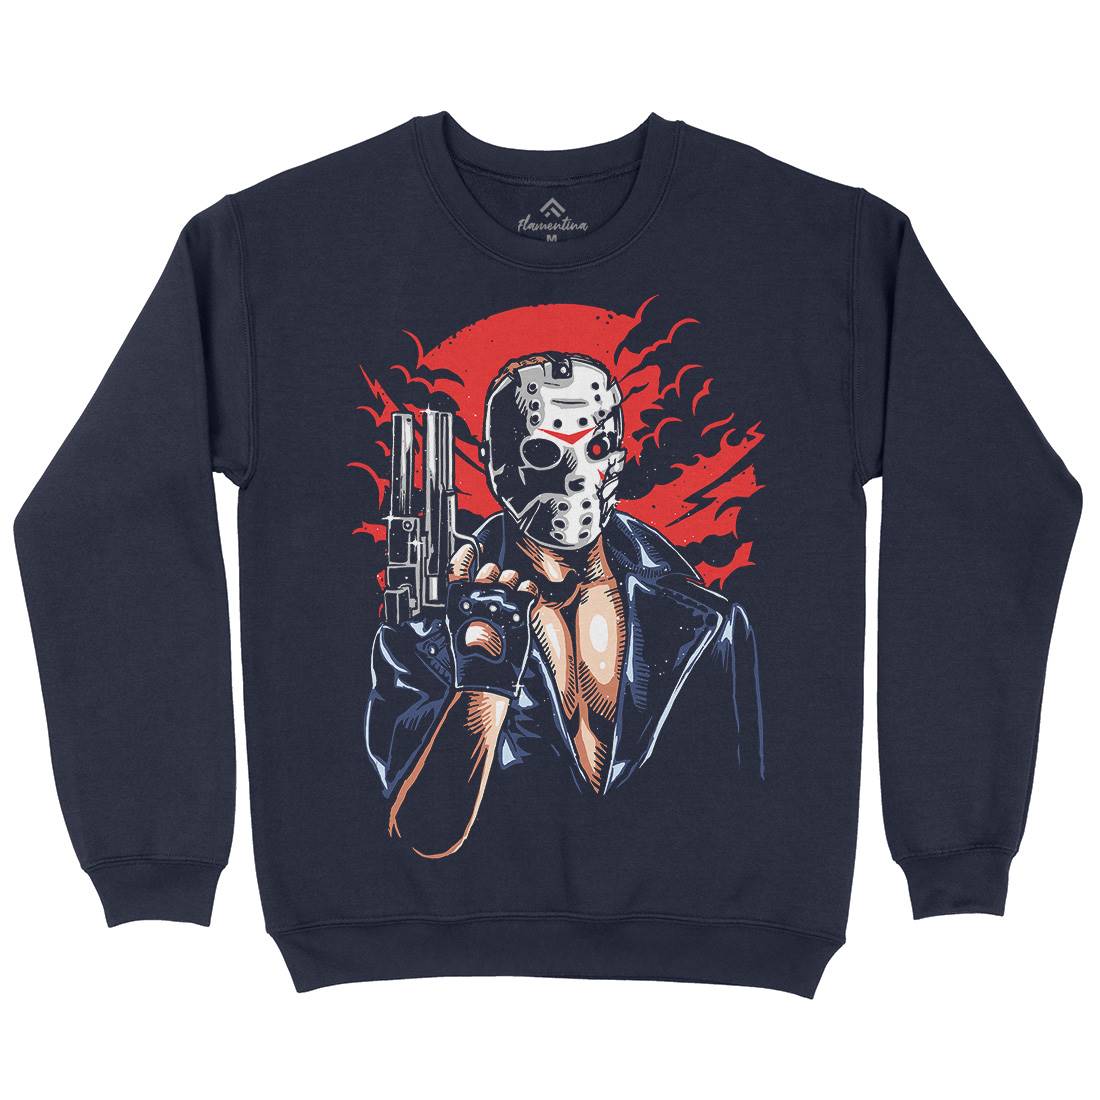 Jason Mens Crew Neck Sweatshirt Horror A548